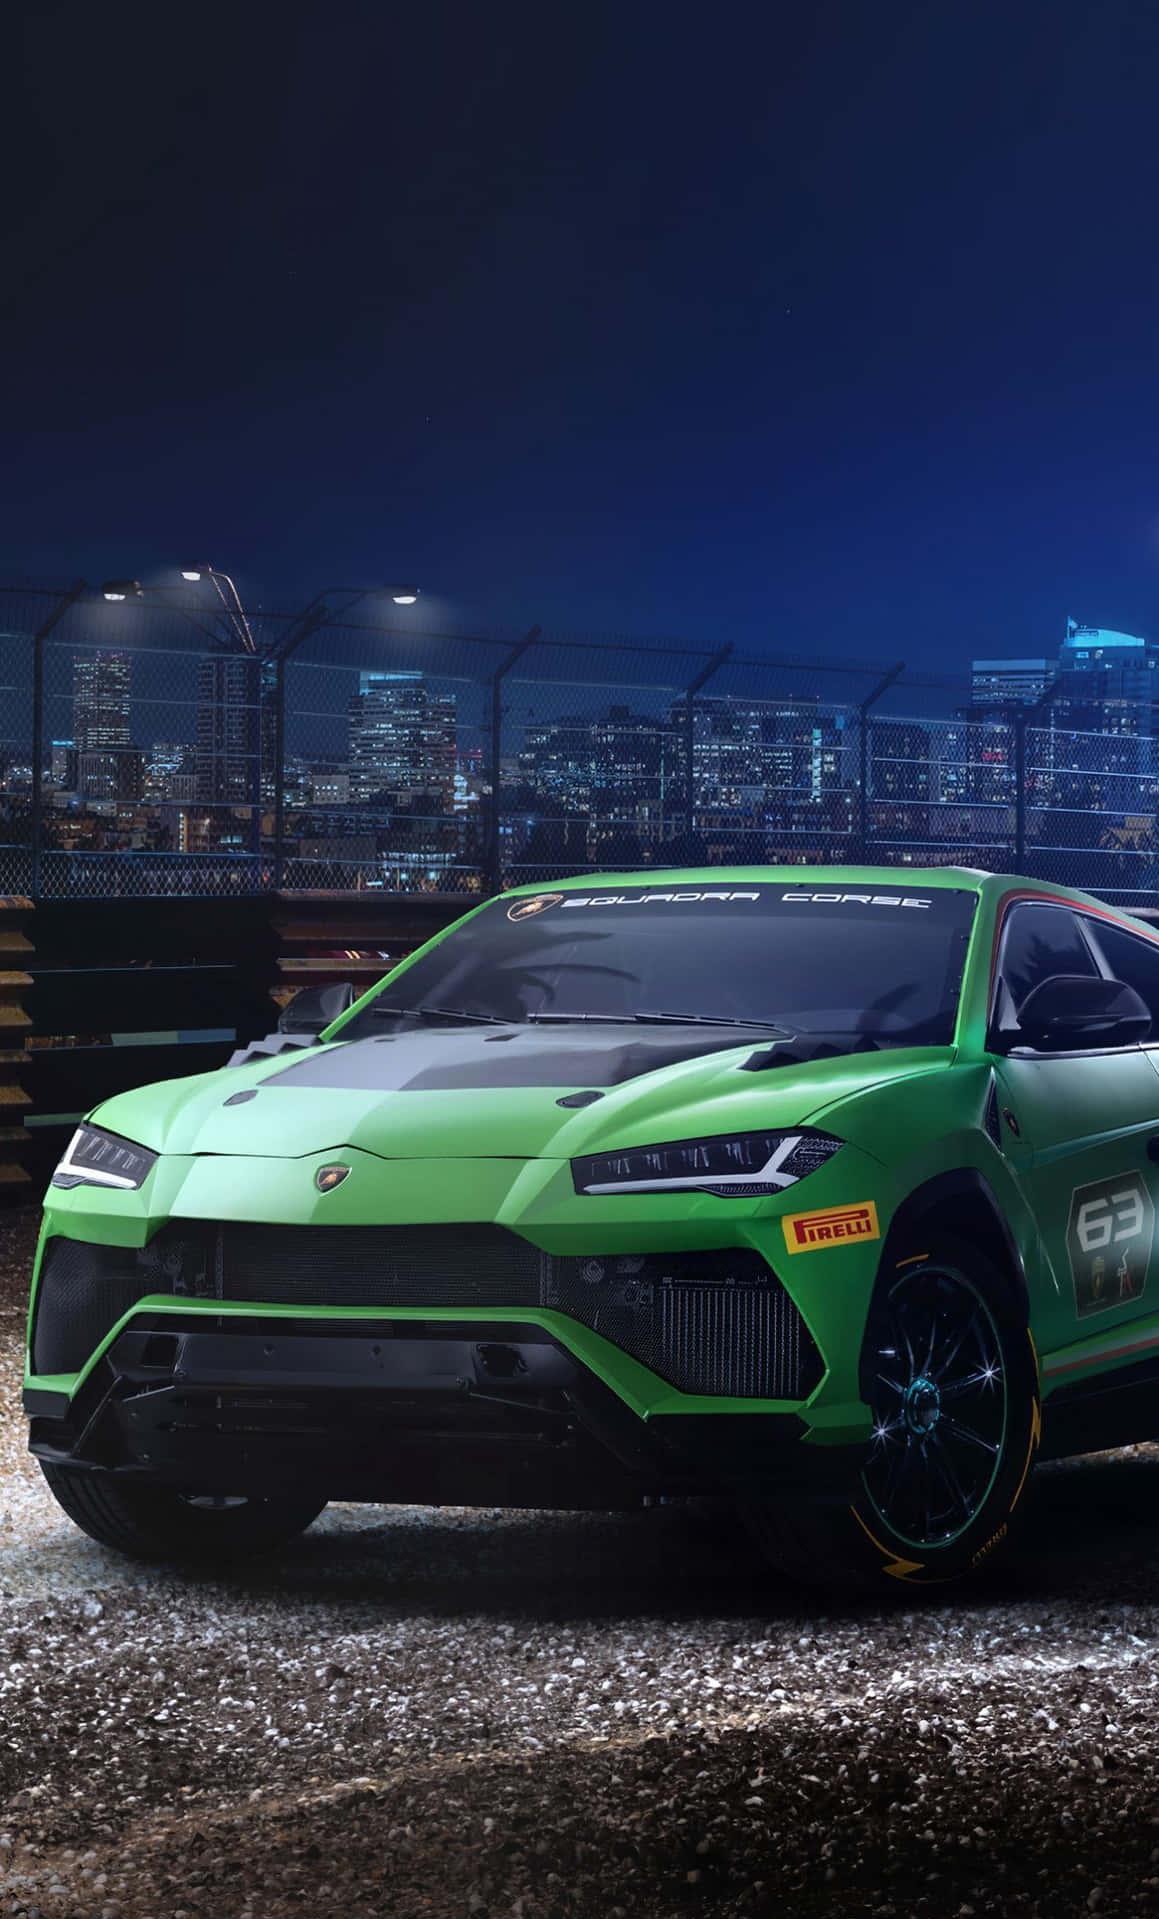 The Green Lamborghini Urus Is Driving Down Street At